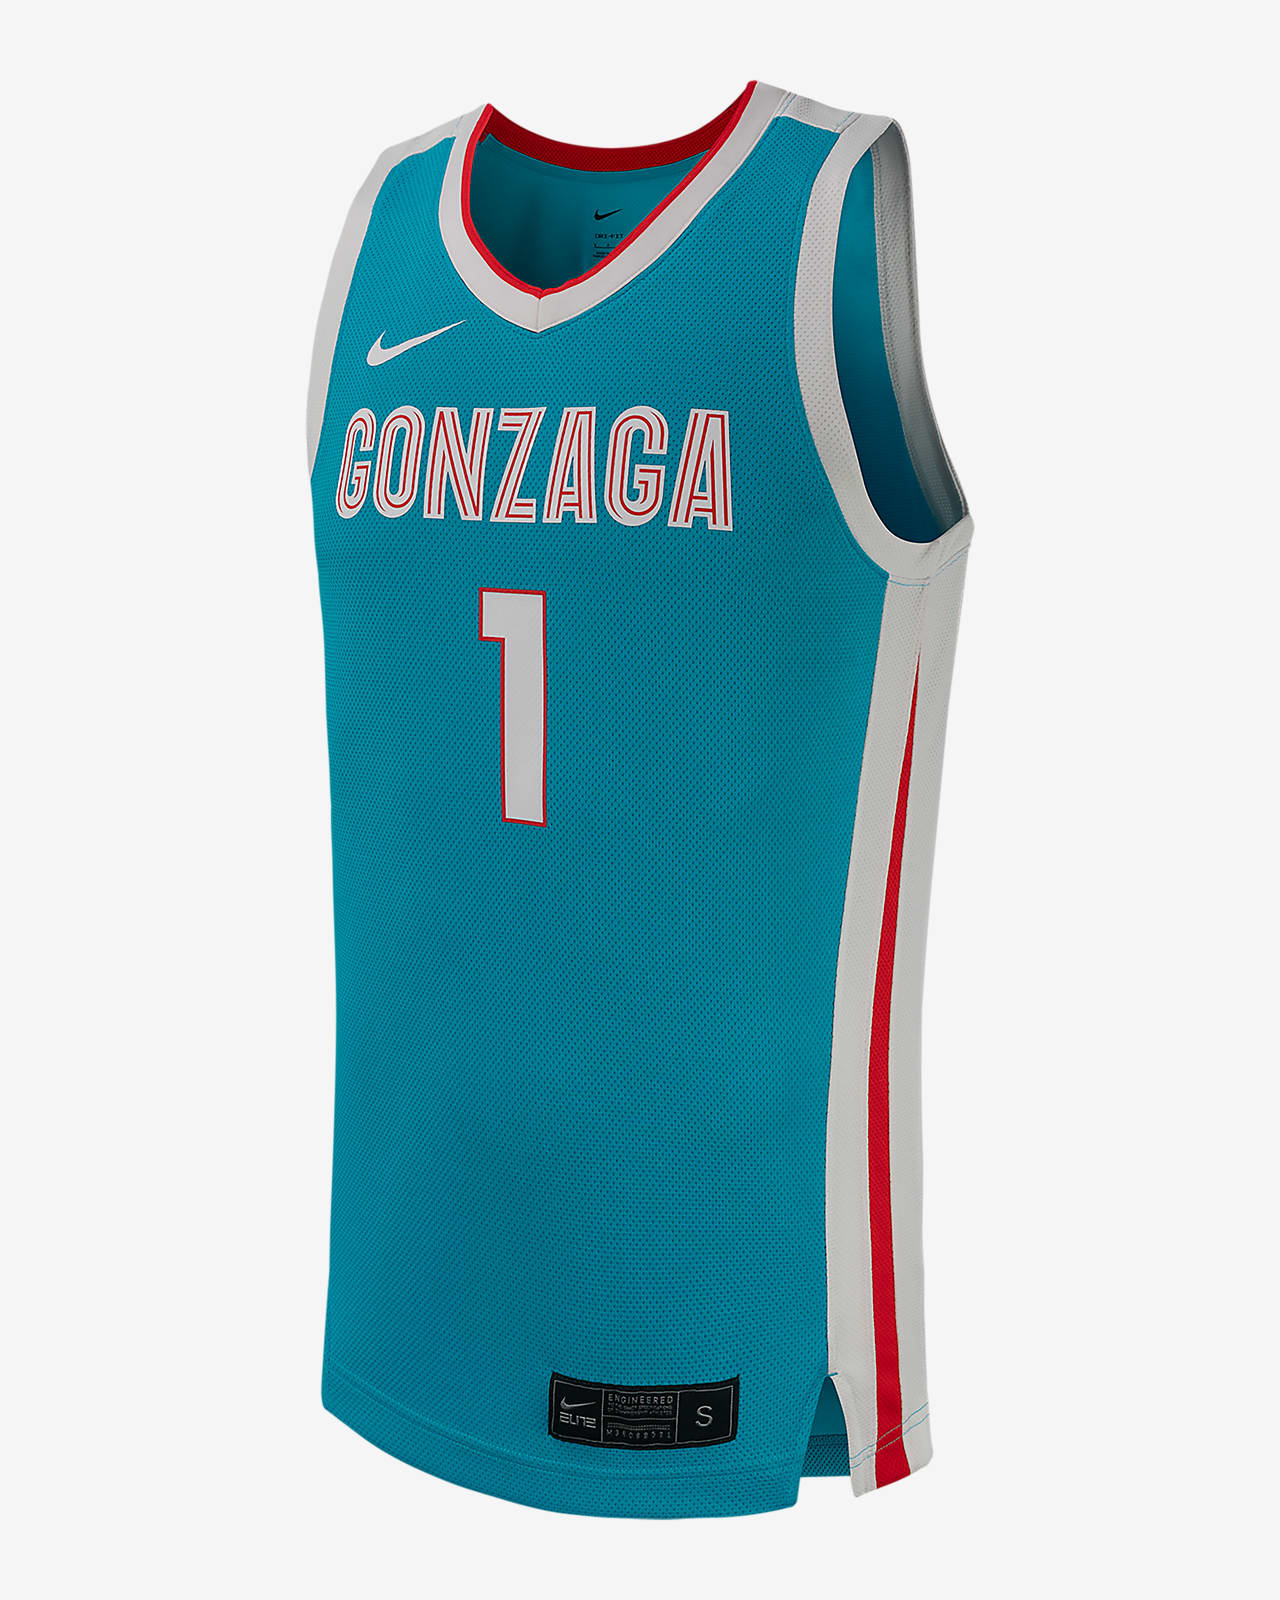 Gonzaga Men's Nike College Basketball Replica Jersey